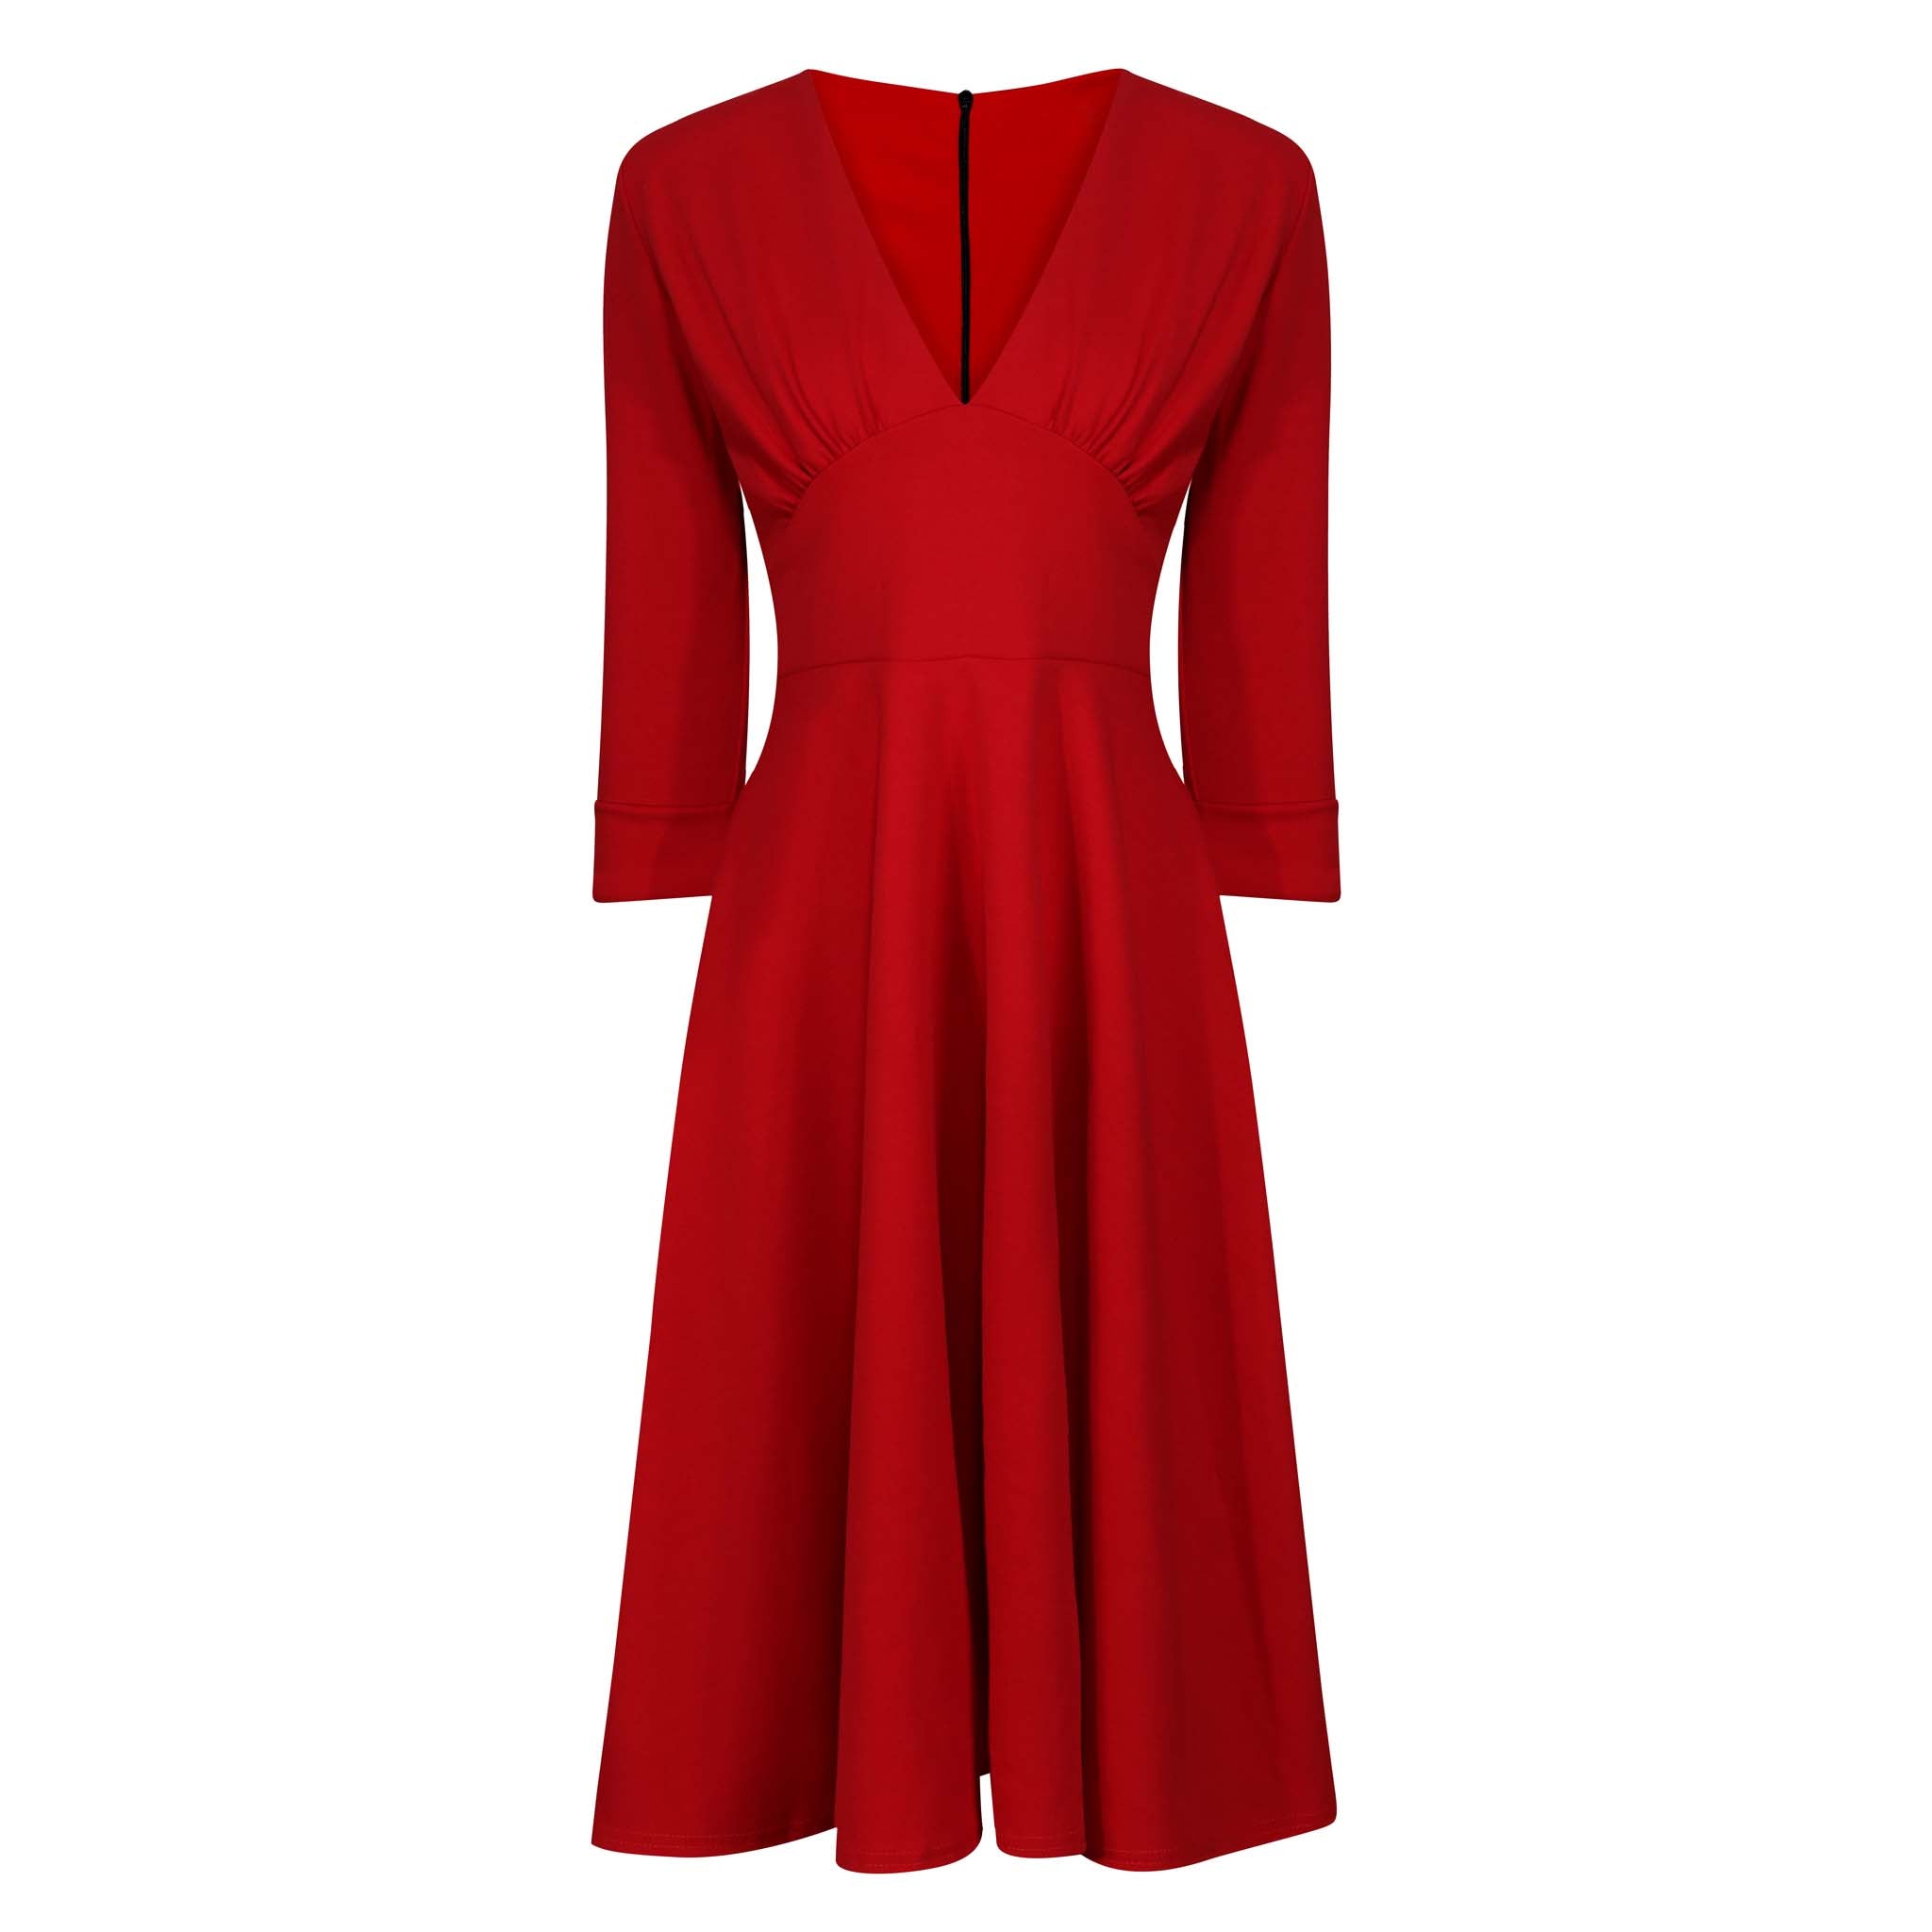 Red Deep V Neck 3/4 Sleeve Rockabilly 50s Swing Dress